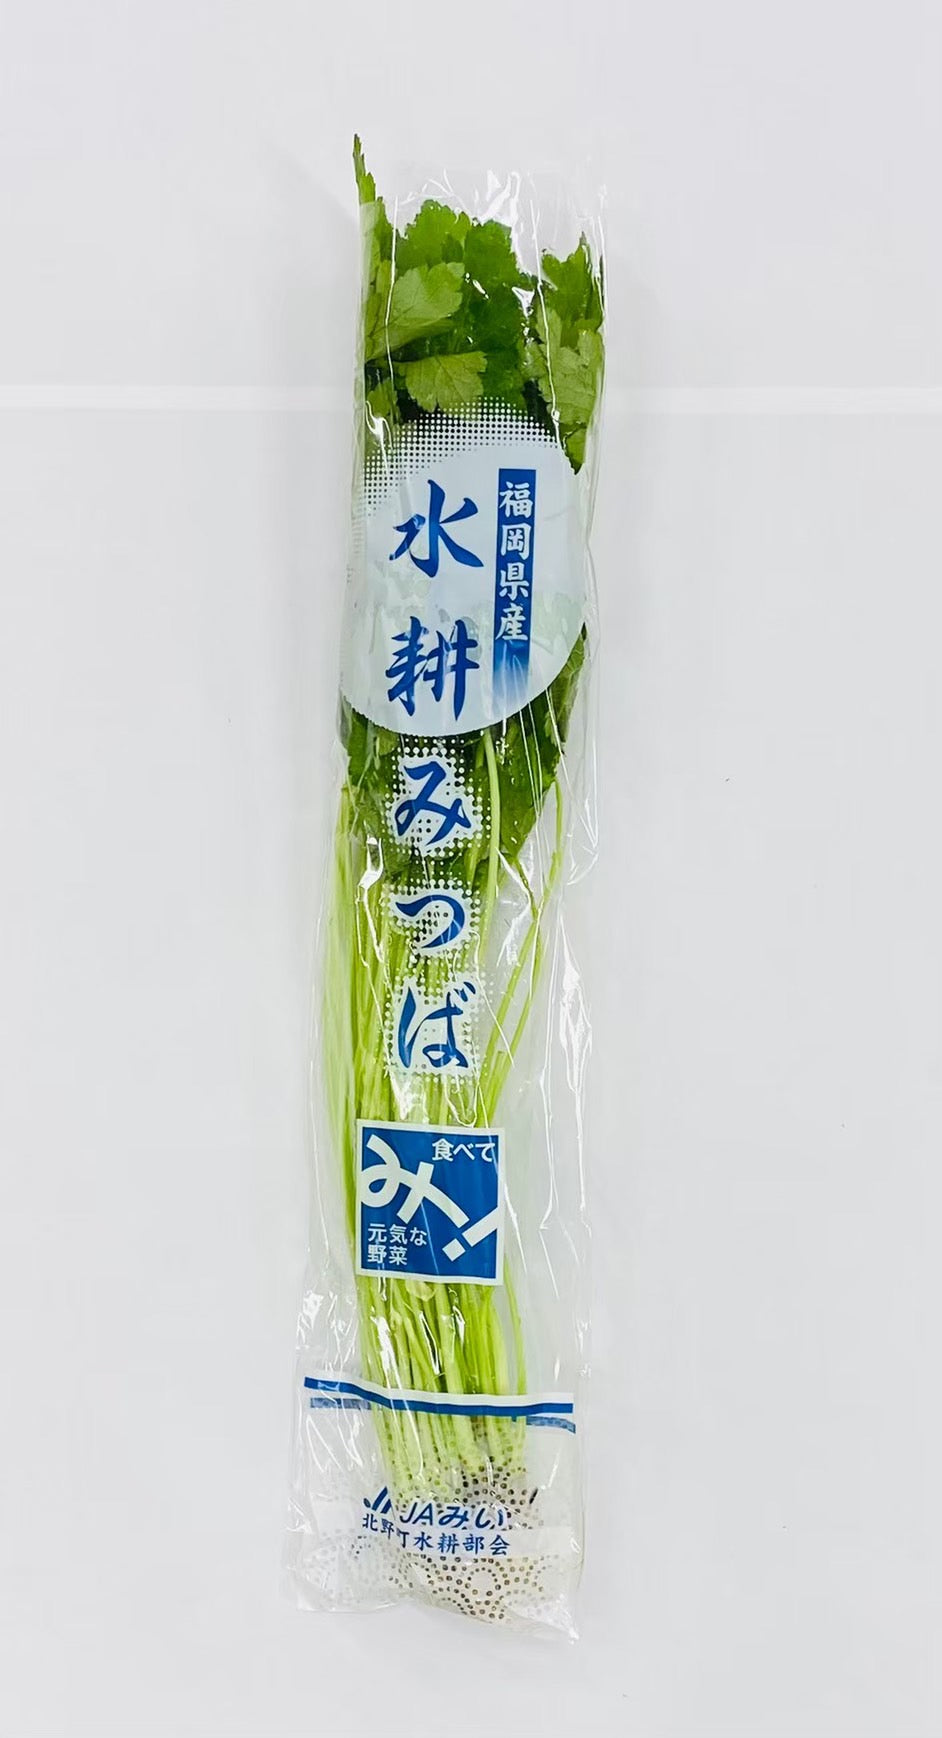 [Anniversary vegetables] Mitsuba (bag) 75g x 10 bags (capacity 750g)